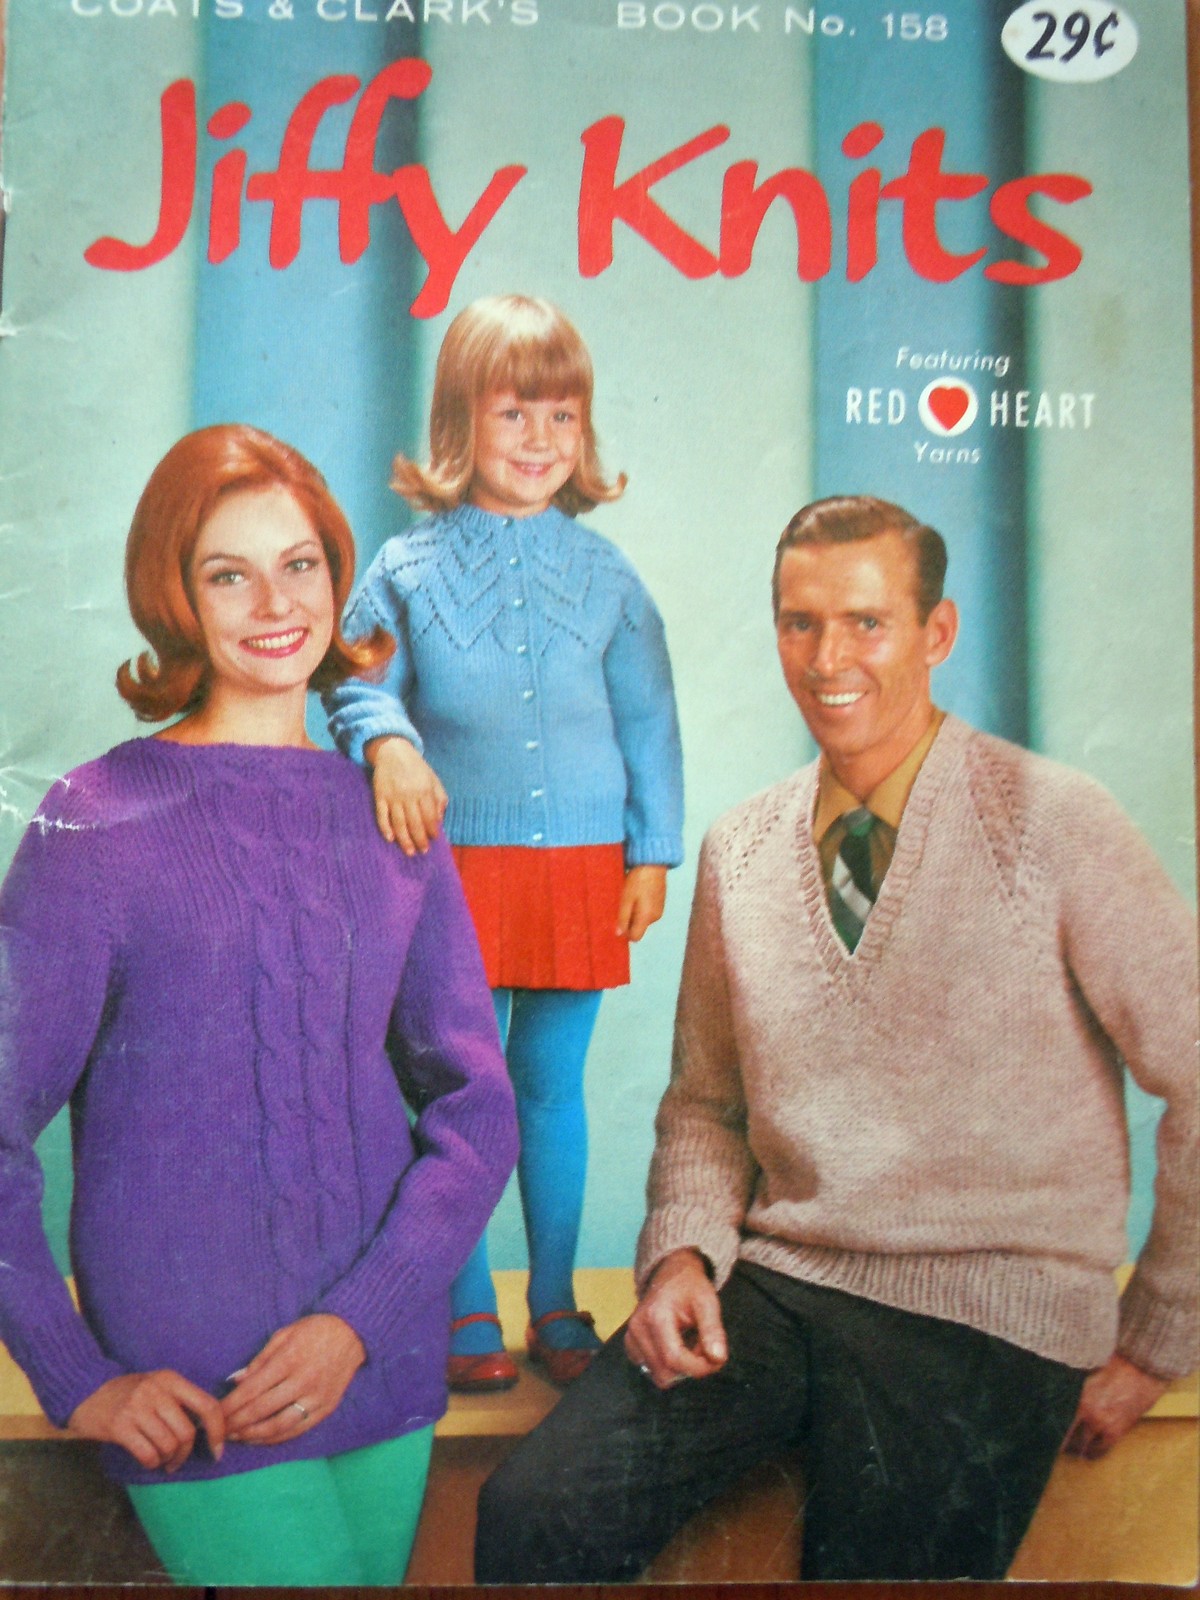 Vintage Jiffy Knits Coats & Clark Book No 158 1965 - £3.12 GBP